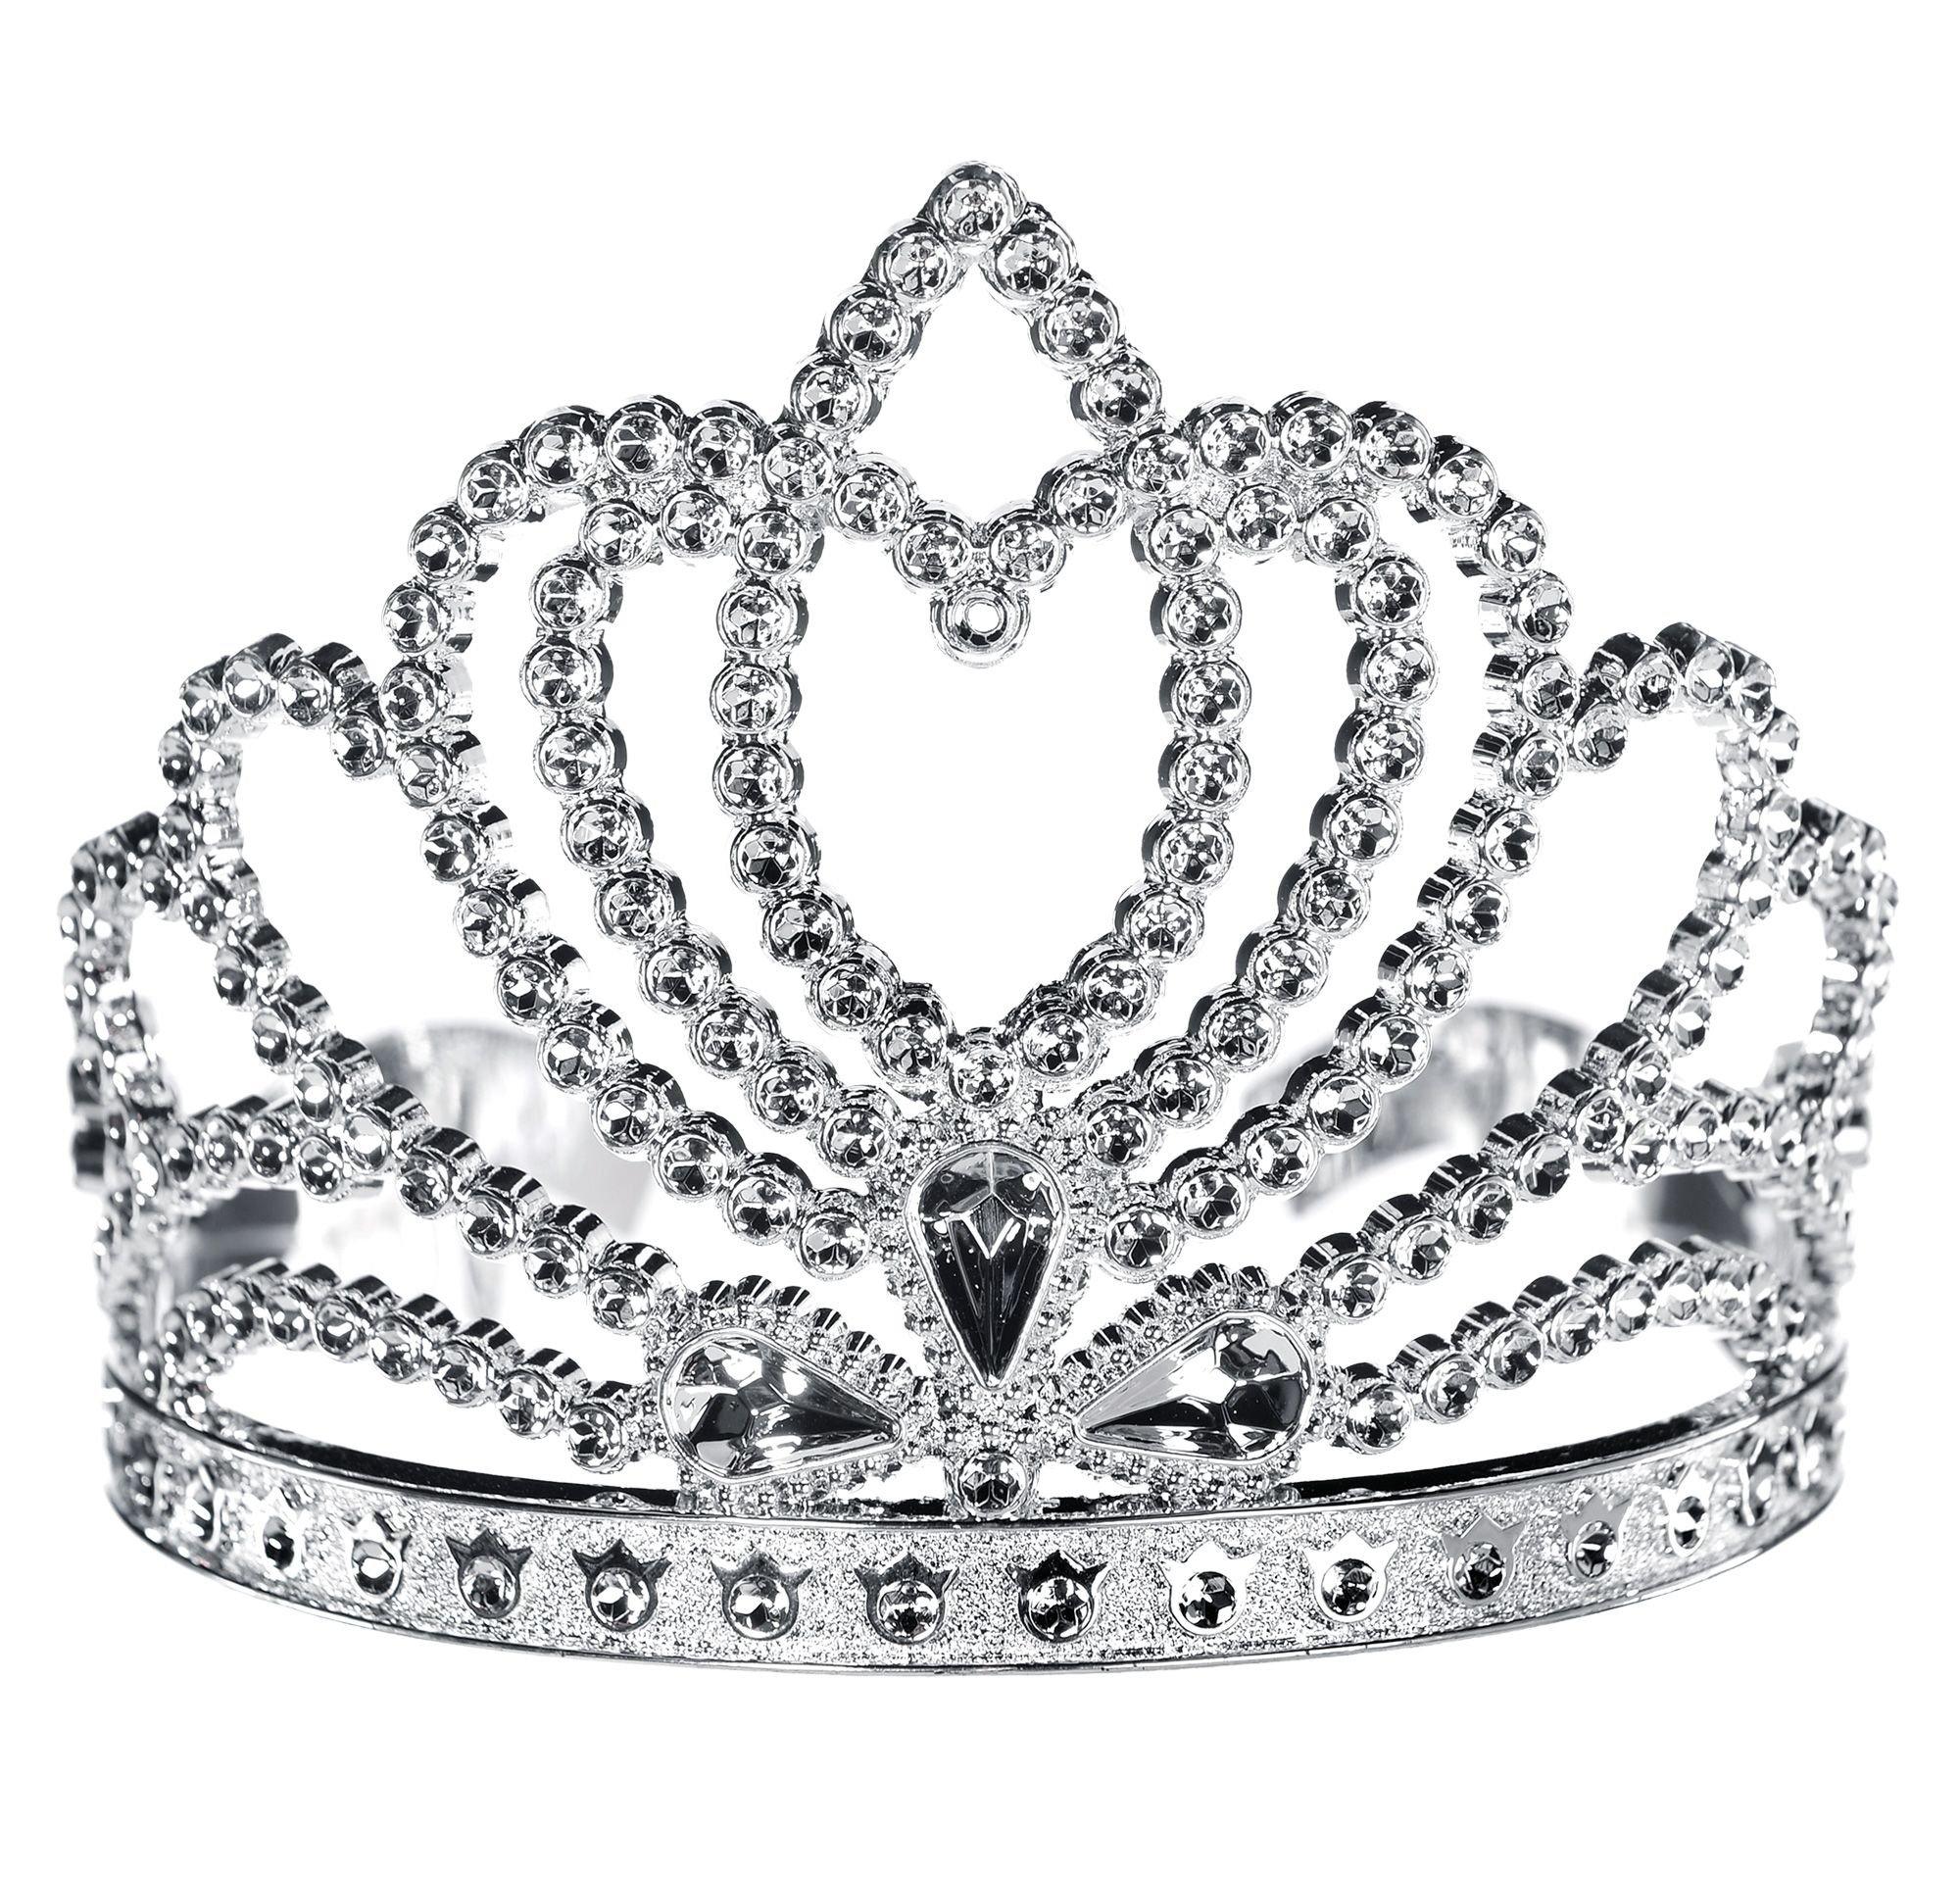 Ayfjovs 15 Pieces 3 Size Rose Gold Crown Cake Topper, Mini Crowns for  Flower Arrangements, Tiny Tiara Crowns for Cake Topper Queen Crowns for  Women